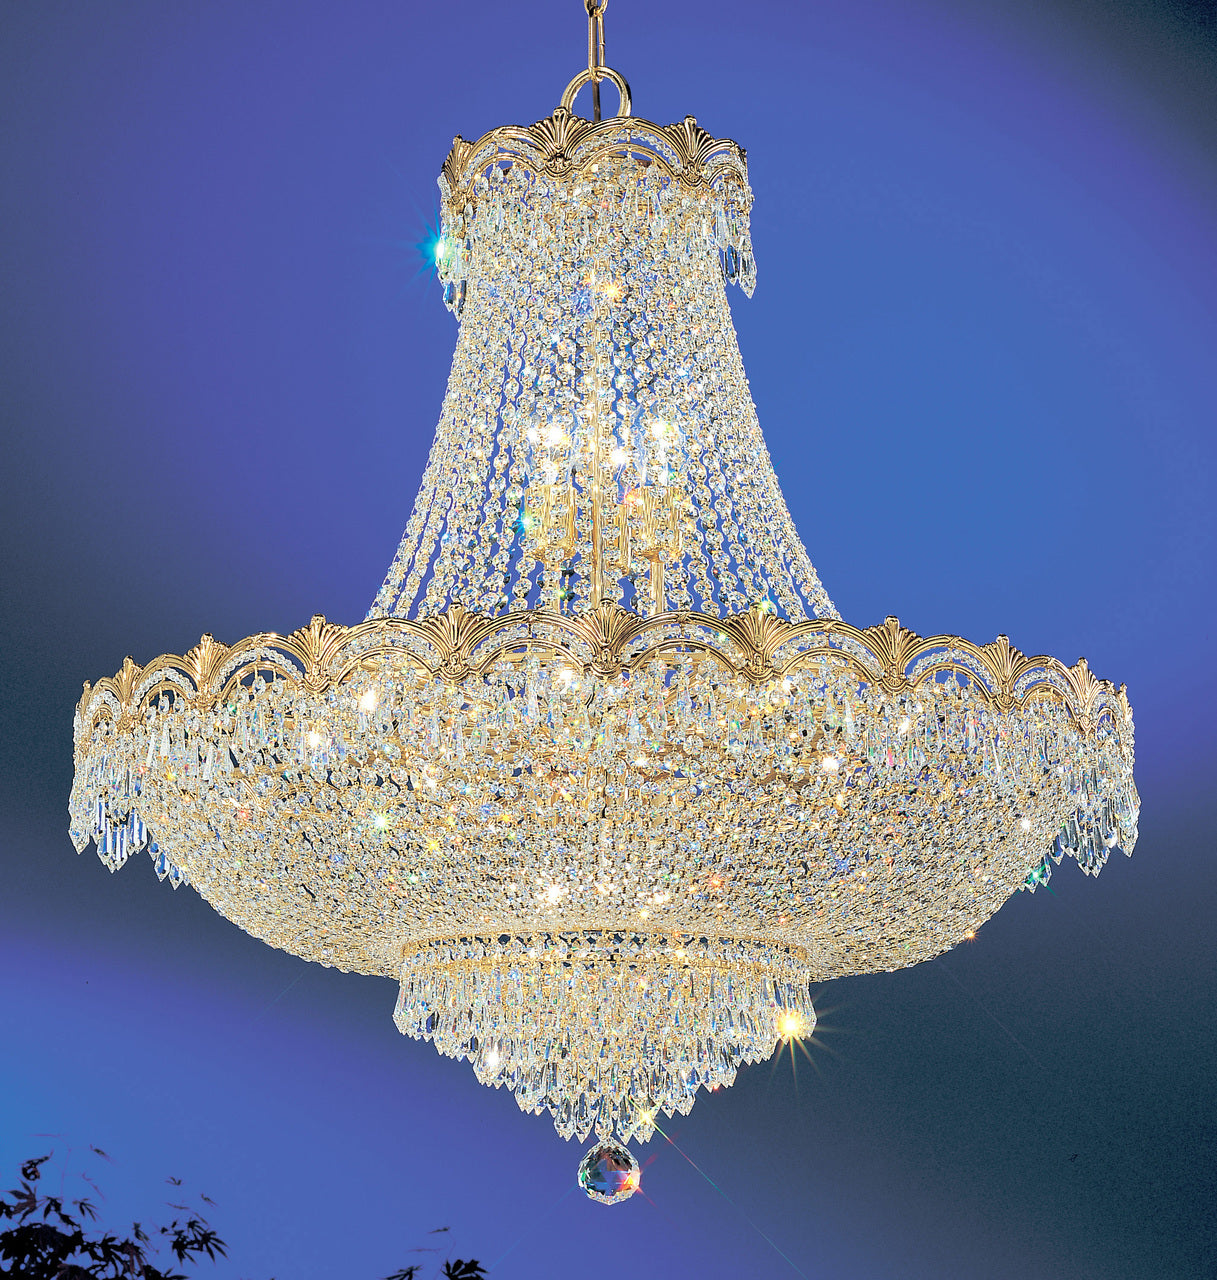 Classic Lighting 1858 G CGT Regency II Crystal Chandelier in 24k Gold (Imported from Spain)